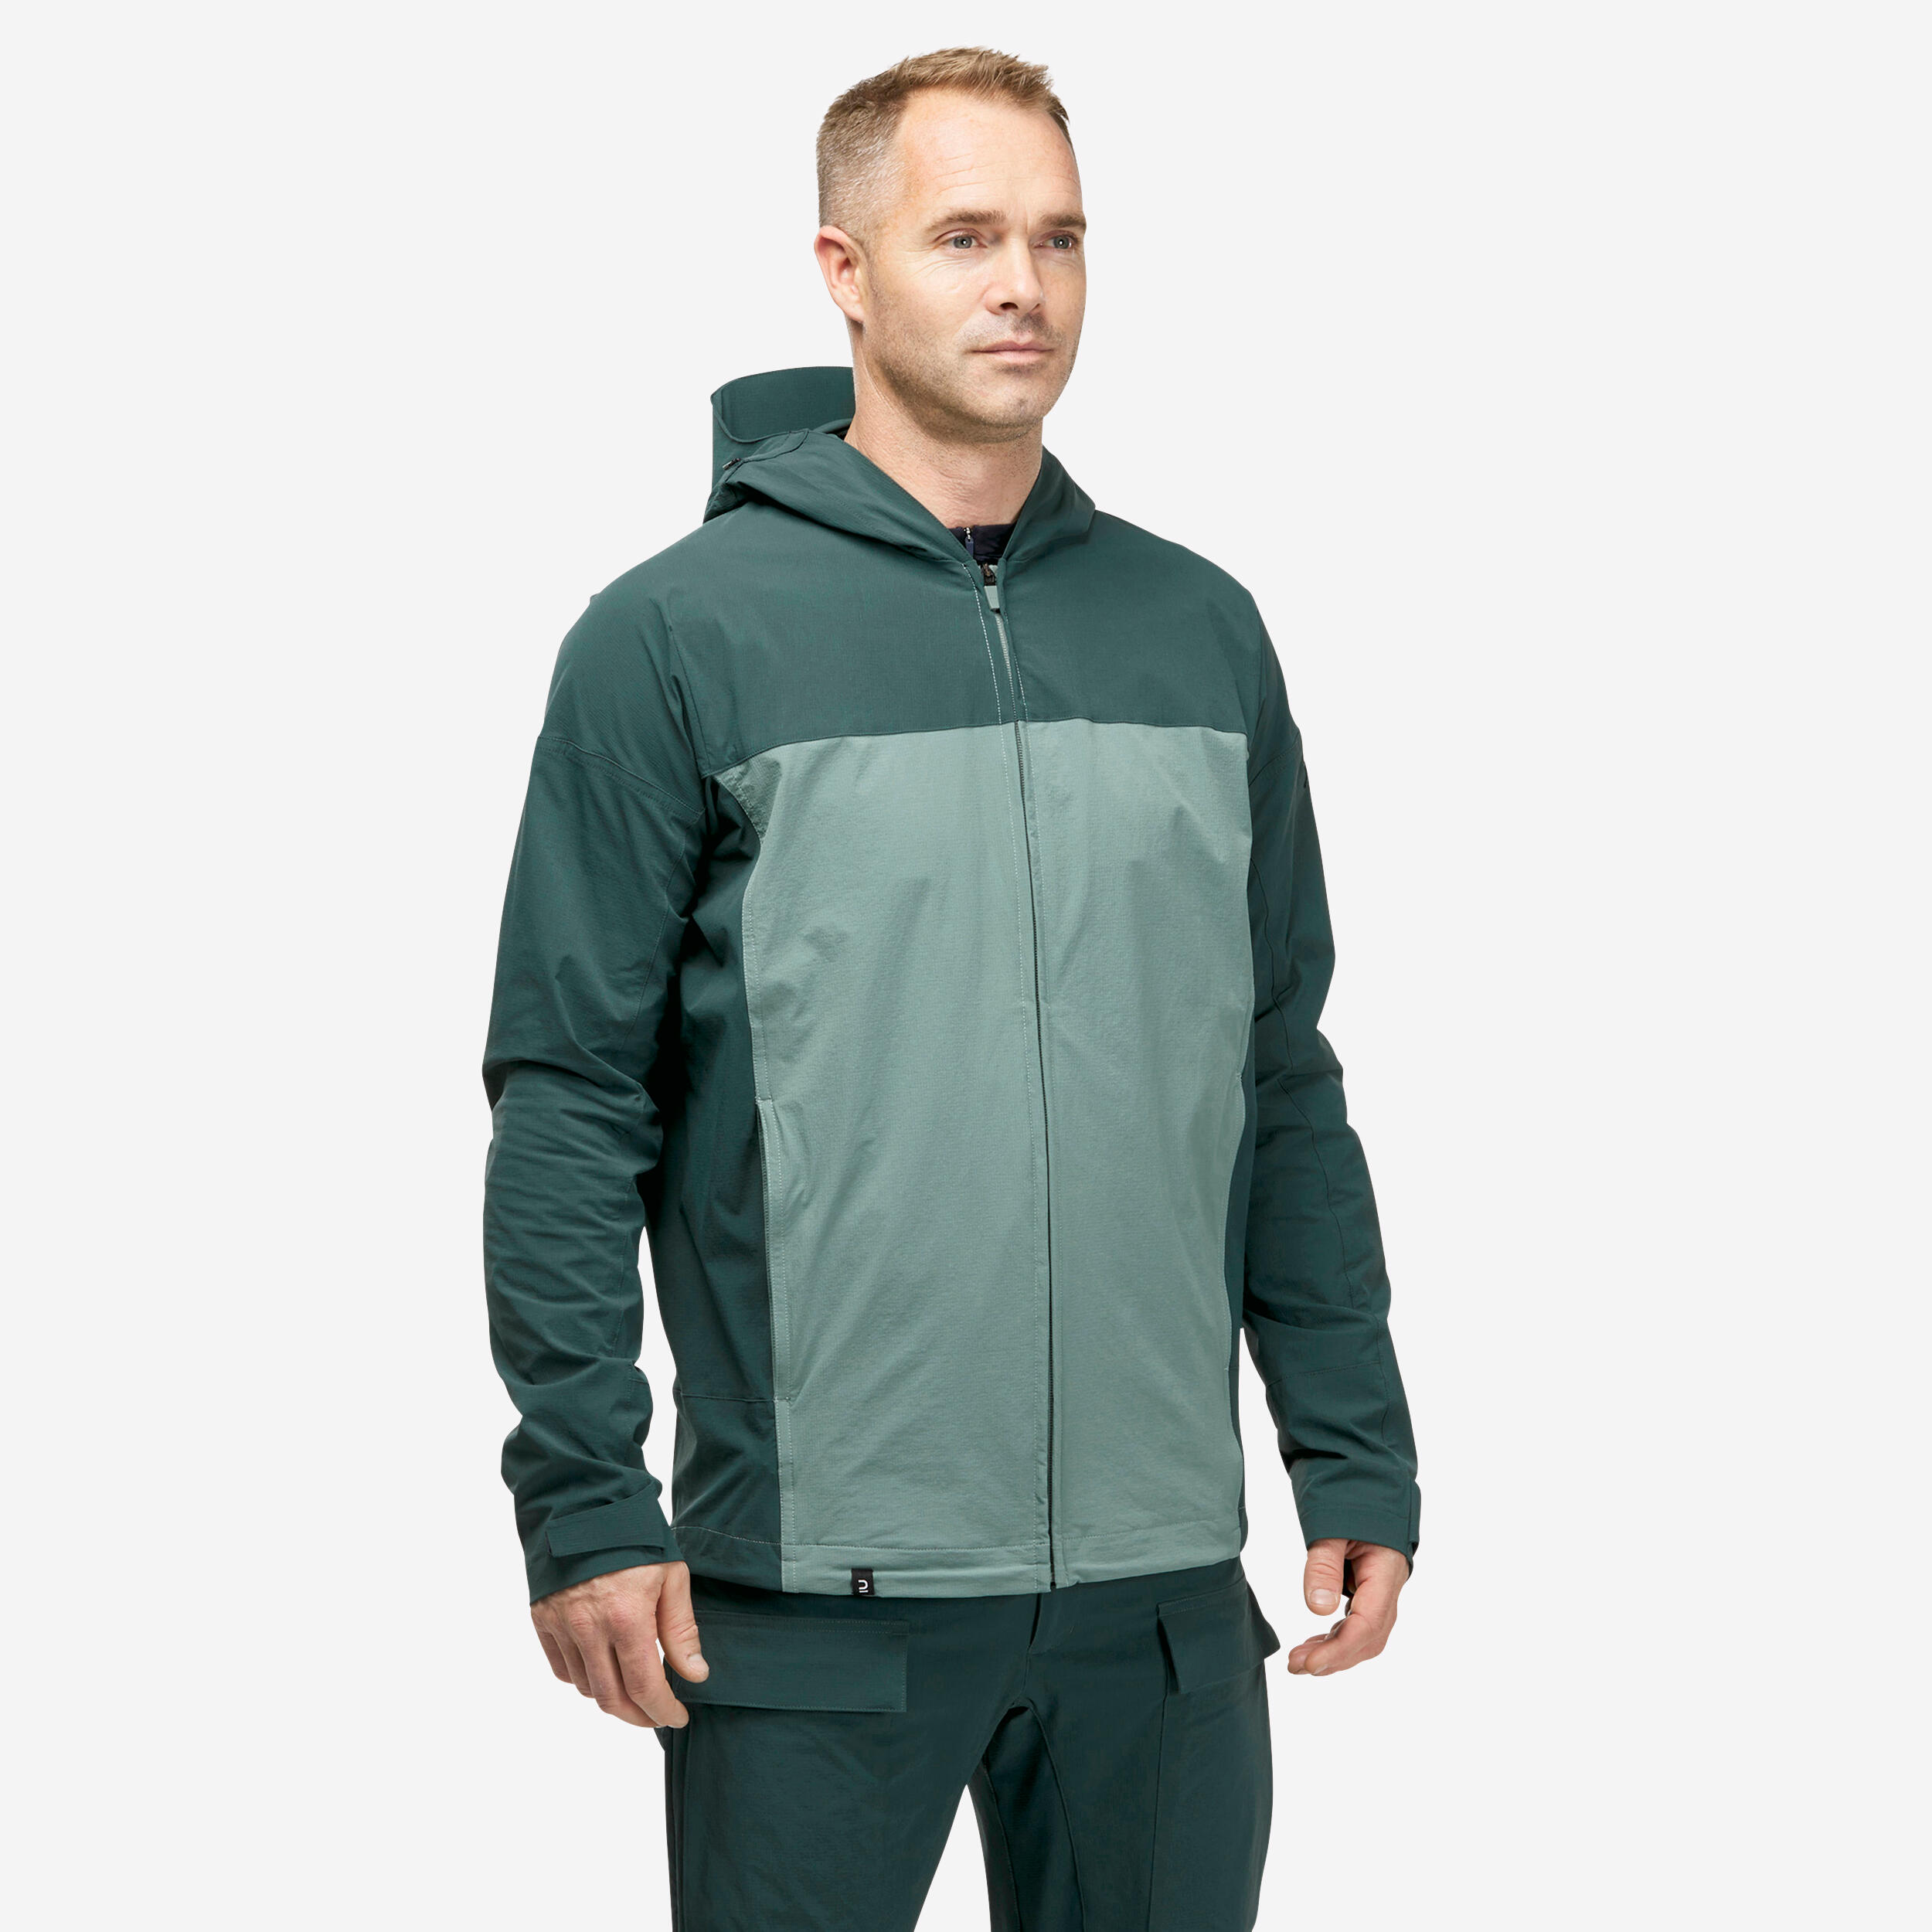 Unisex anti-mosquito jacket - Tropic 900 - Green 1/17